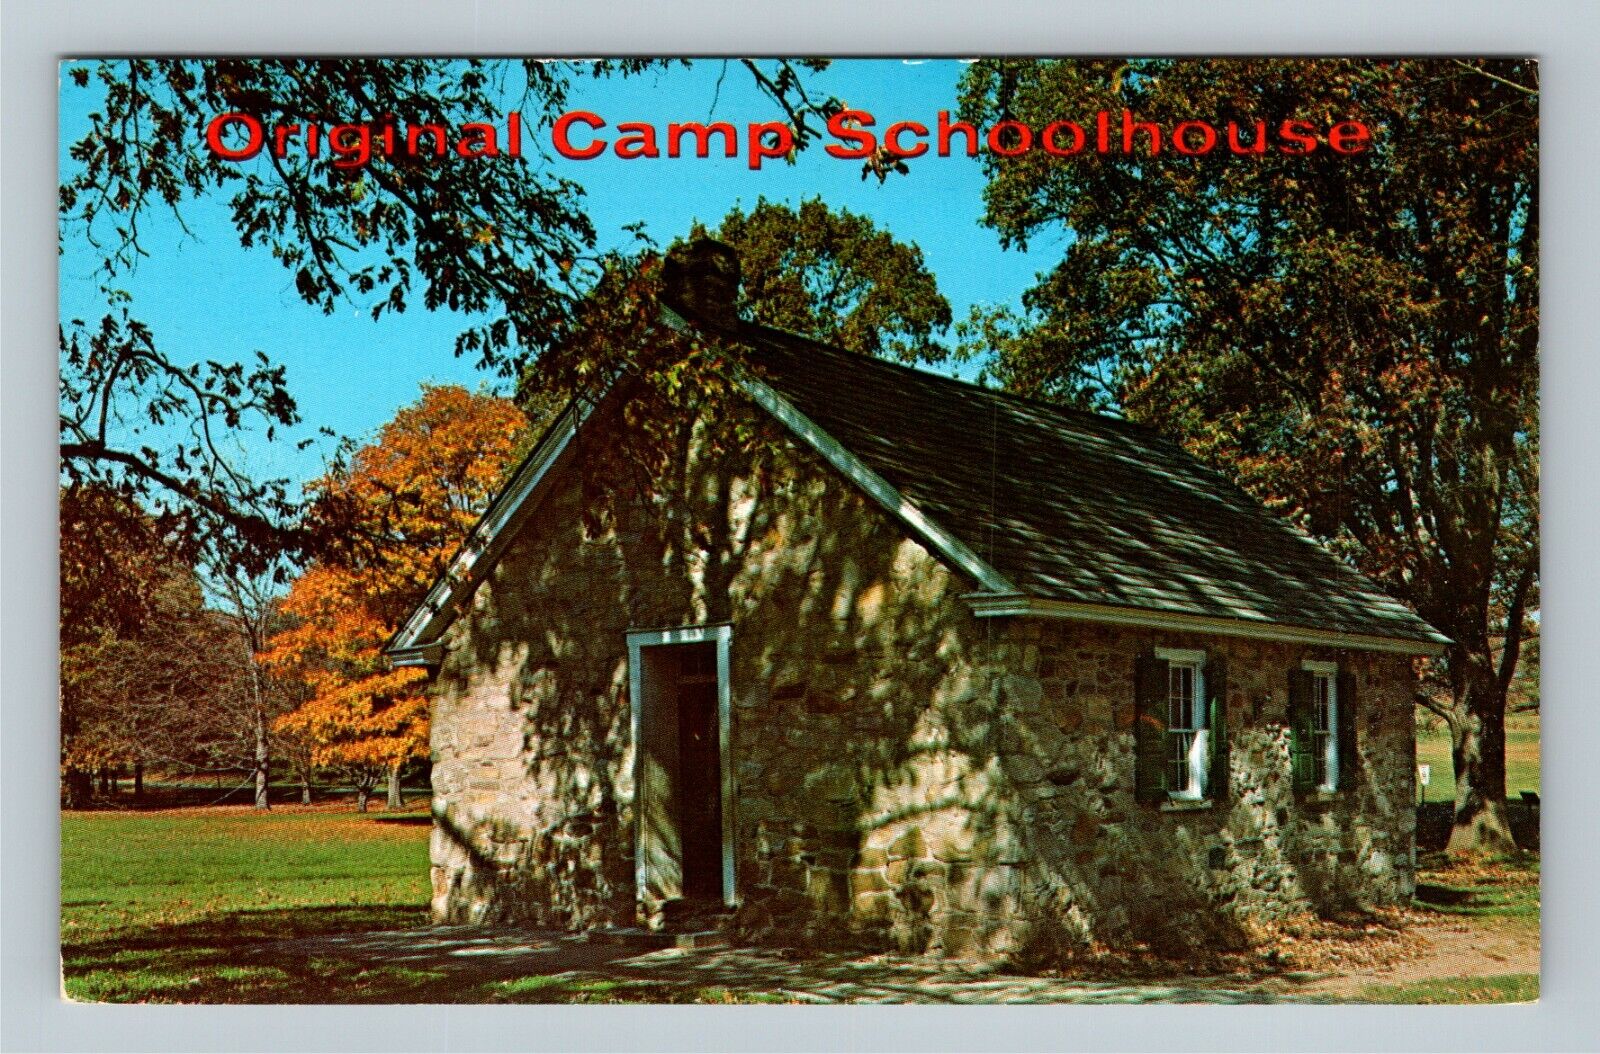 Valley Forge Park, Historic Stone Camp Schoolhouse Vintage Pennsylvania Postcard